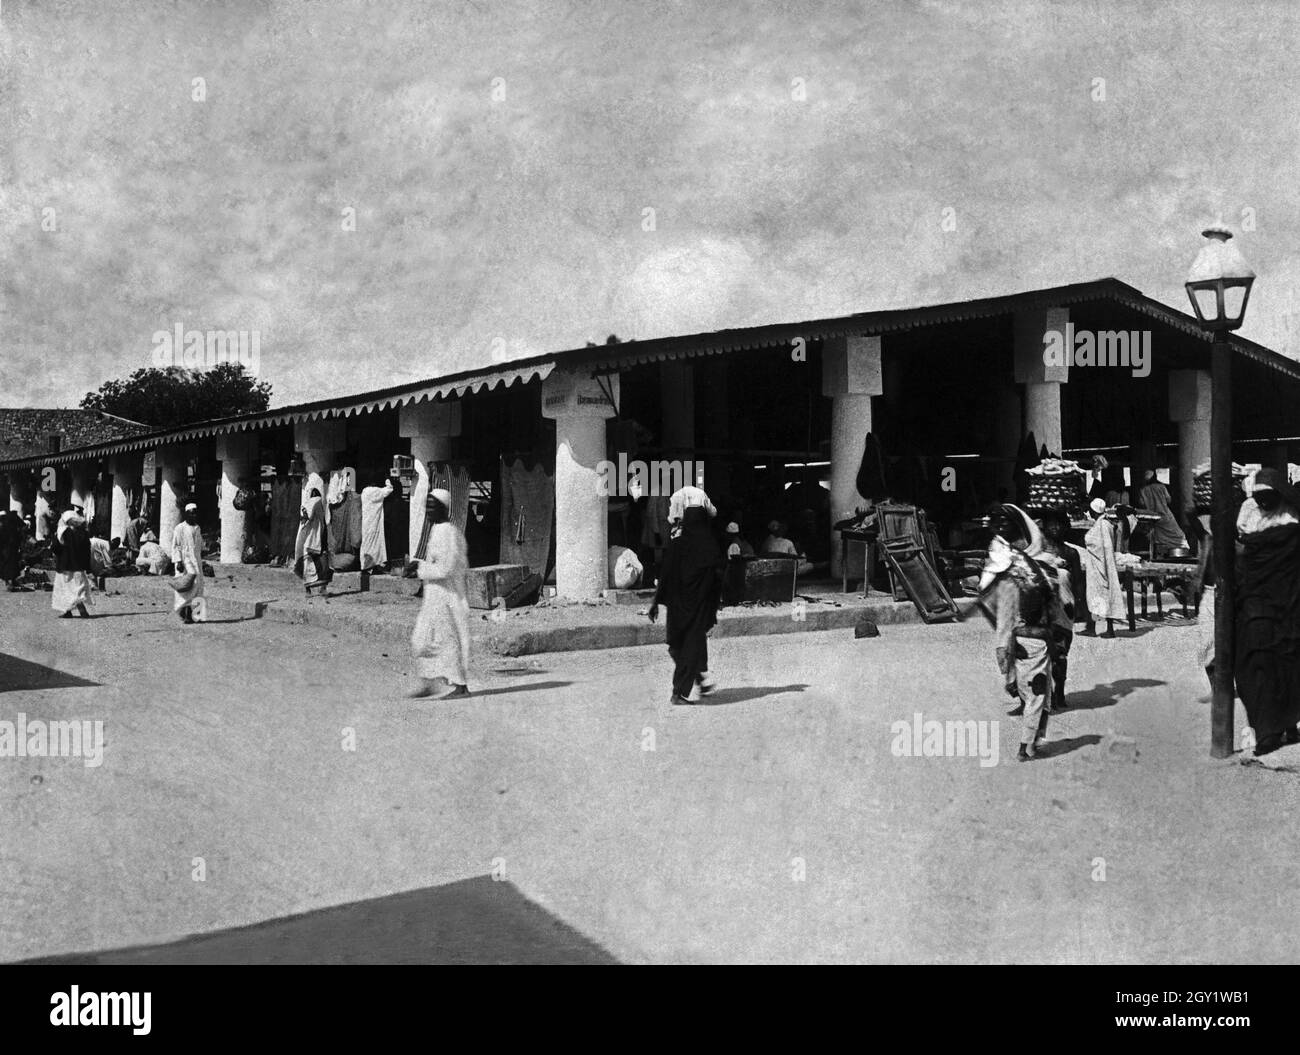 Markthalle in Dar es Salam, Deutsch-Ostafrika 1900er Jahre. Sala del mercato principale a Dar es Salam, Africa orientale tedesca del 1900. Foto Stock